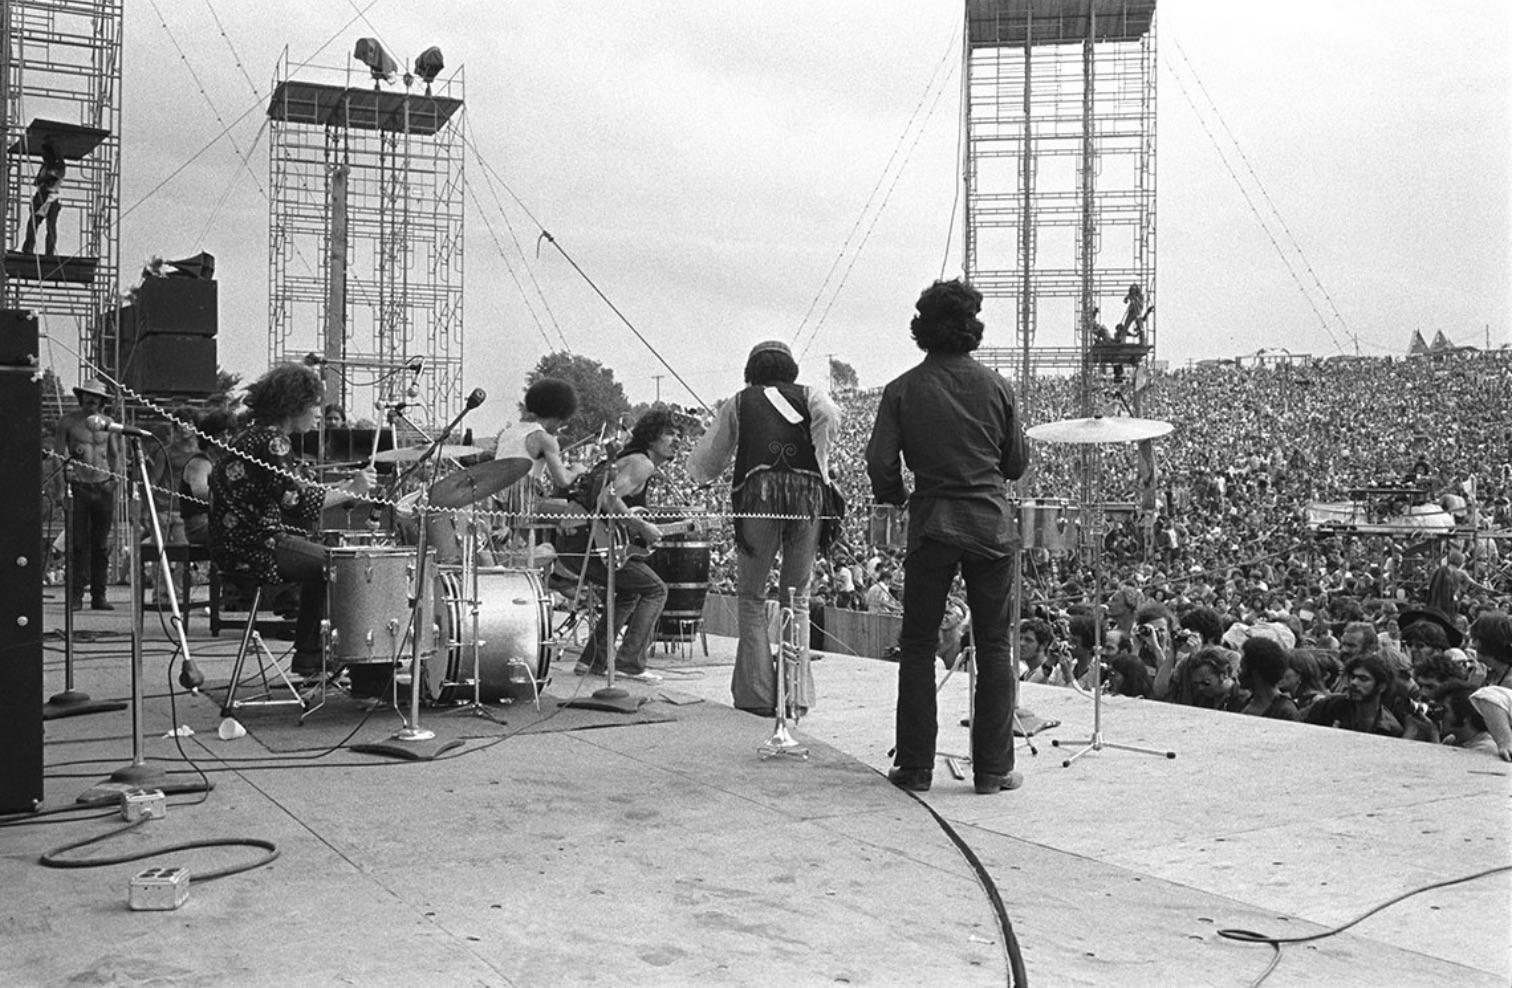 Baron Wolman Black and White Photograph - Santana, Woodstock, 1969